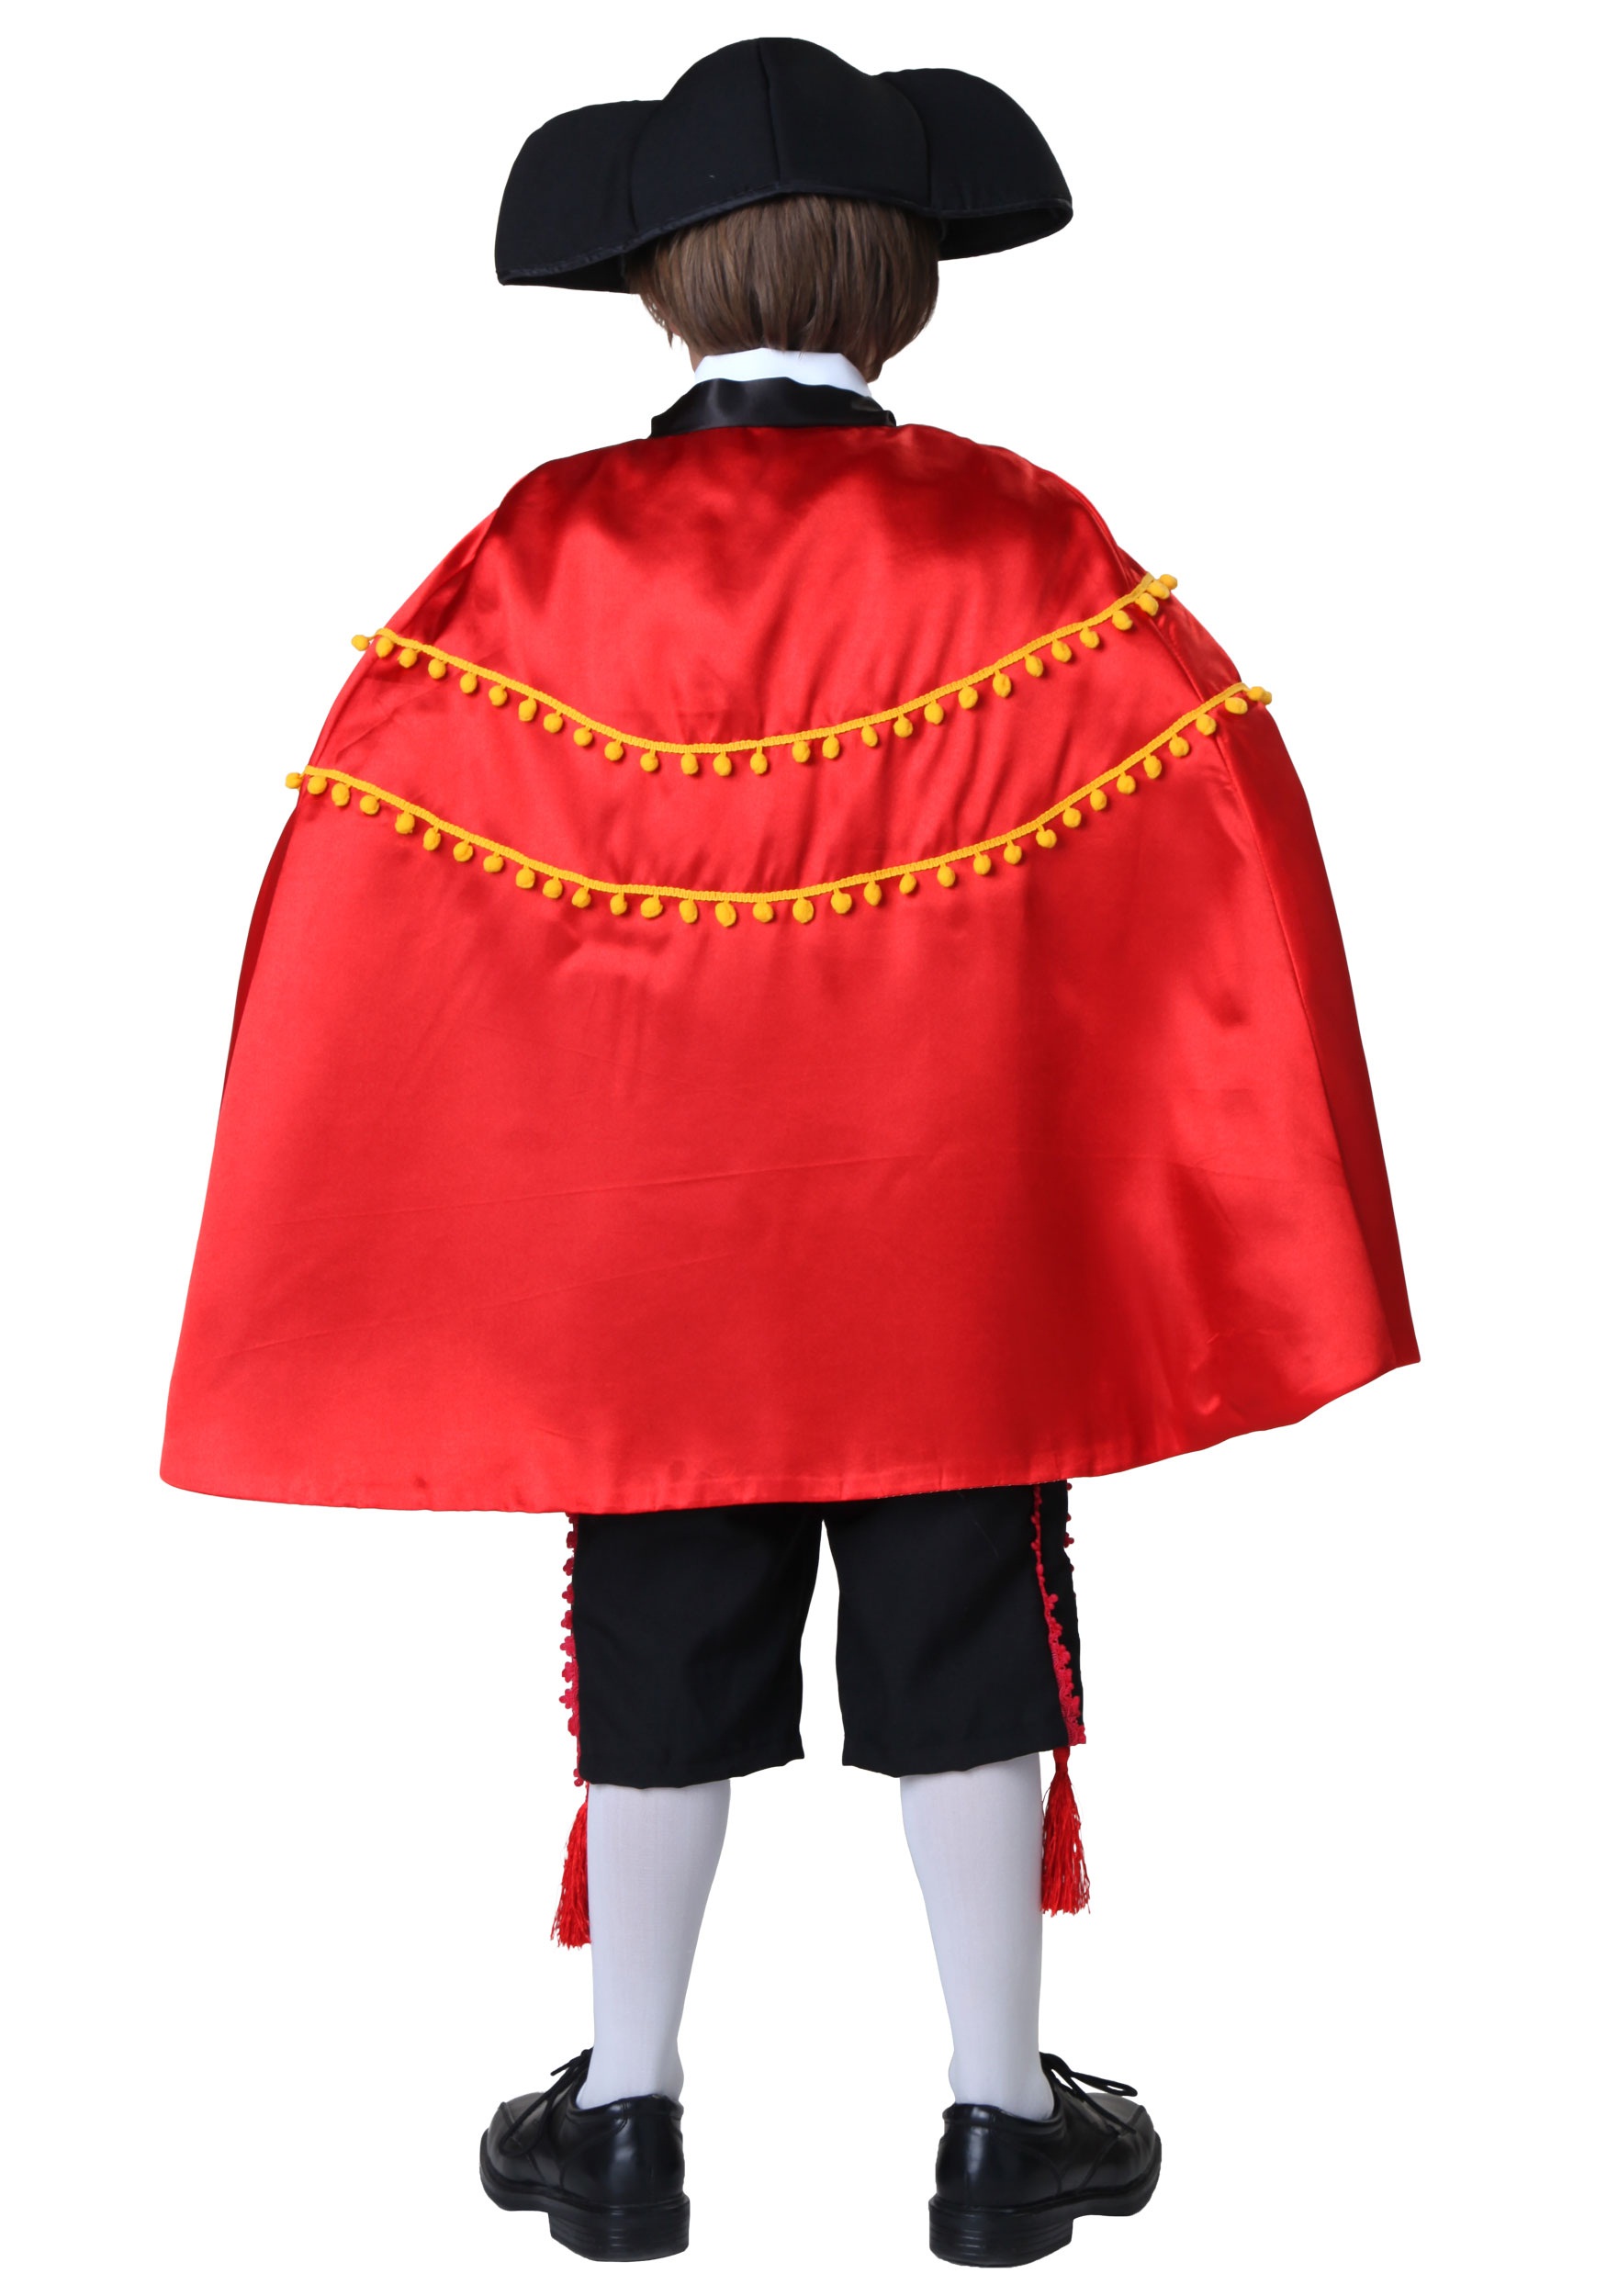 Matador Costume For Kids